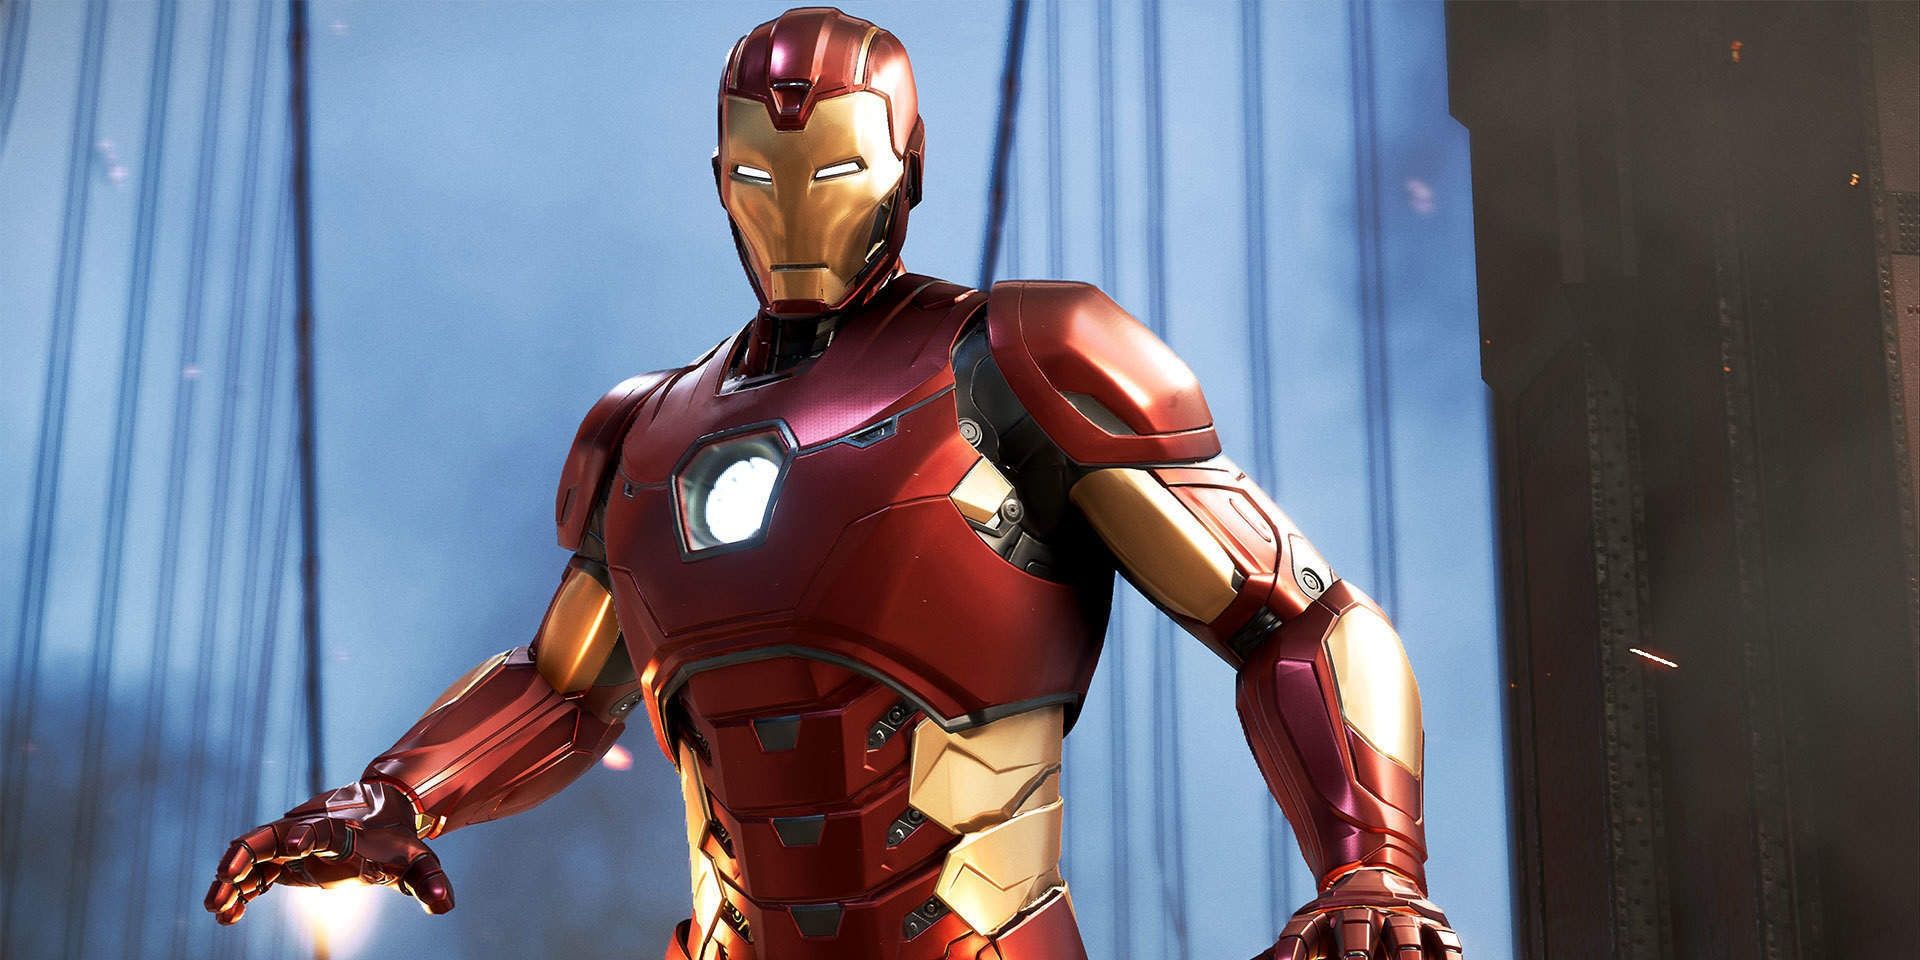 Iron Man from Marvel's Avengers